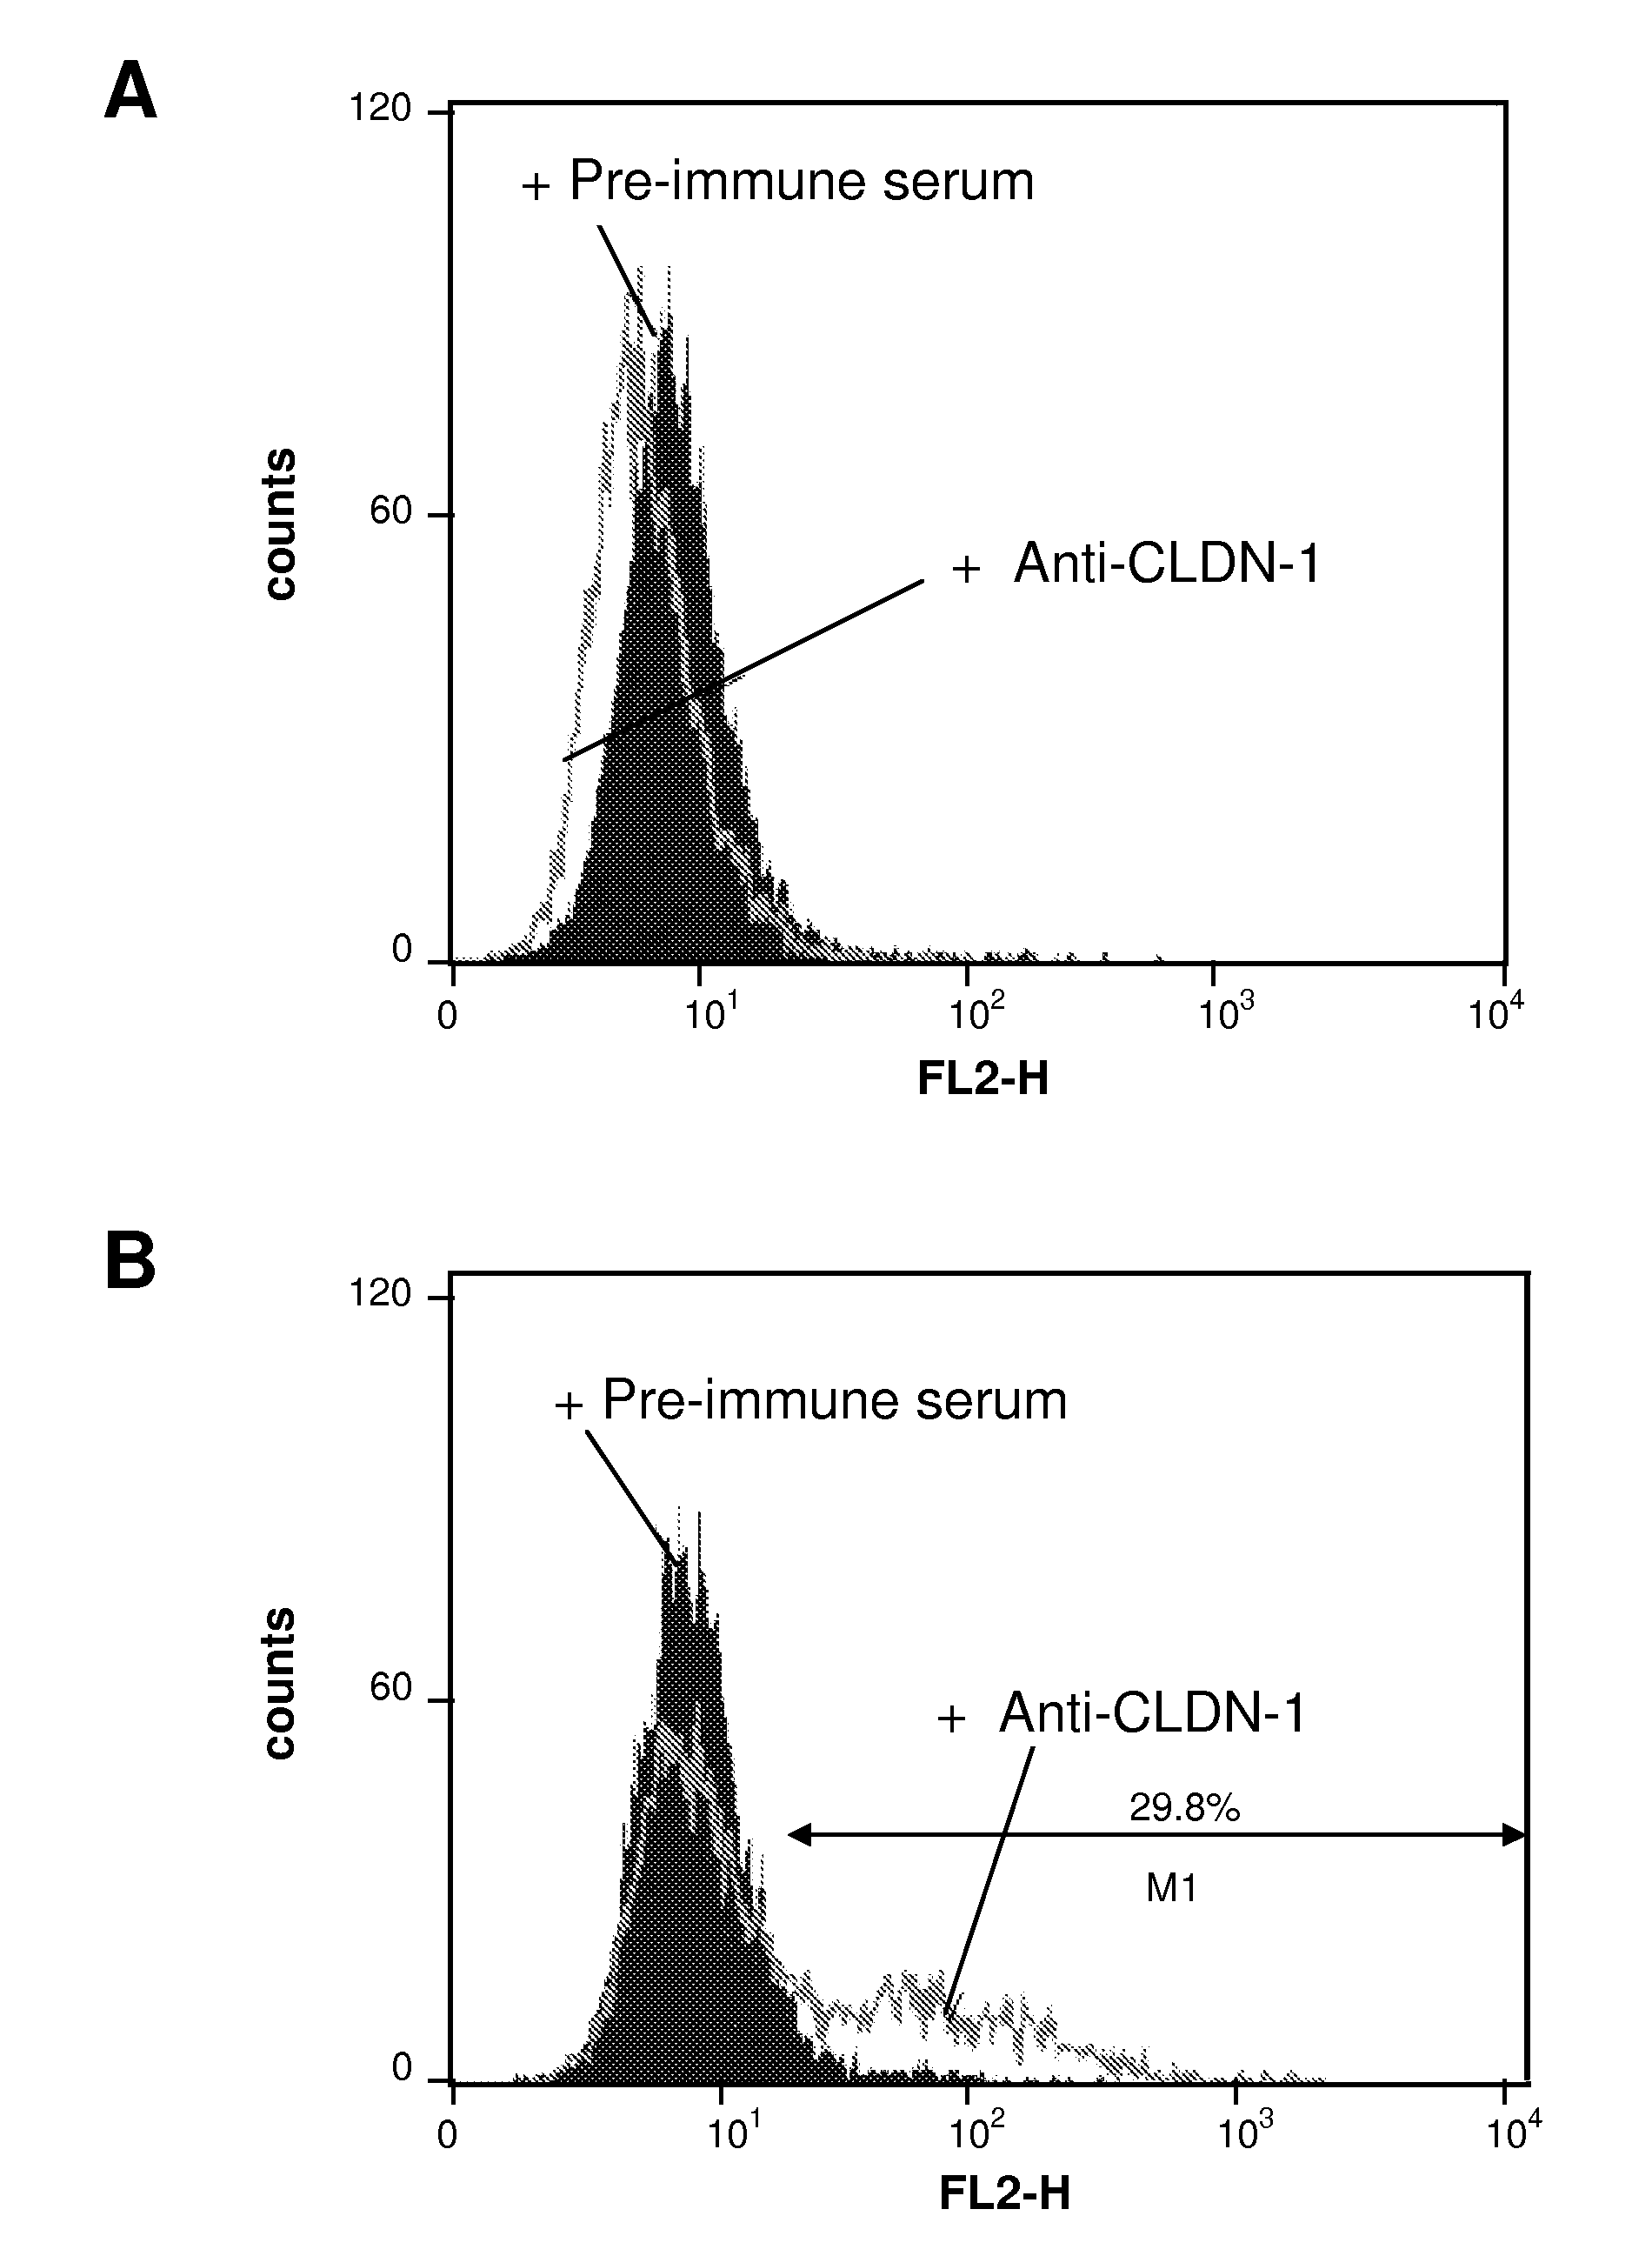 Monoclonal Anti-Claudin 1 Antibodies for the Inhibition of Hepatitis C Virus Infection